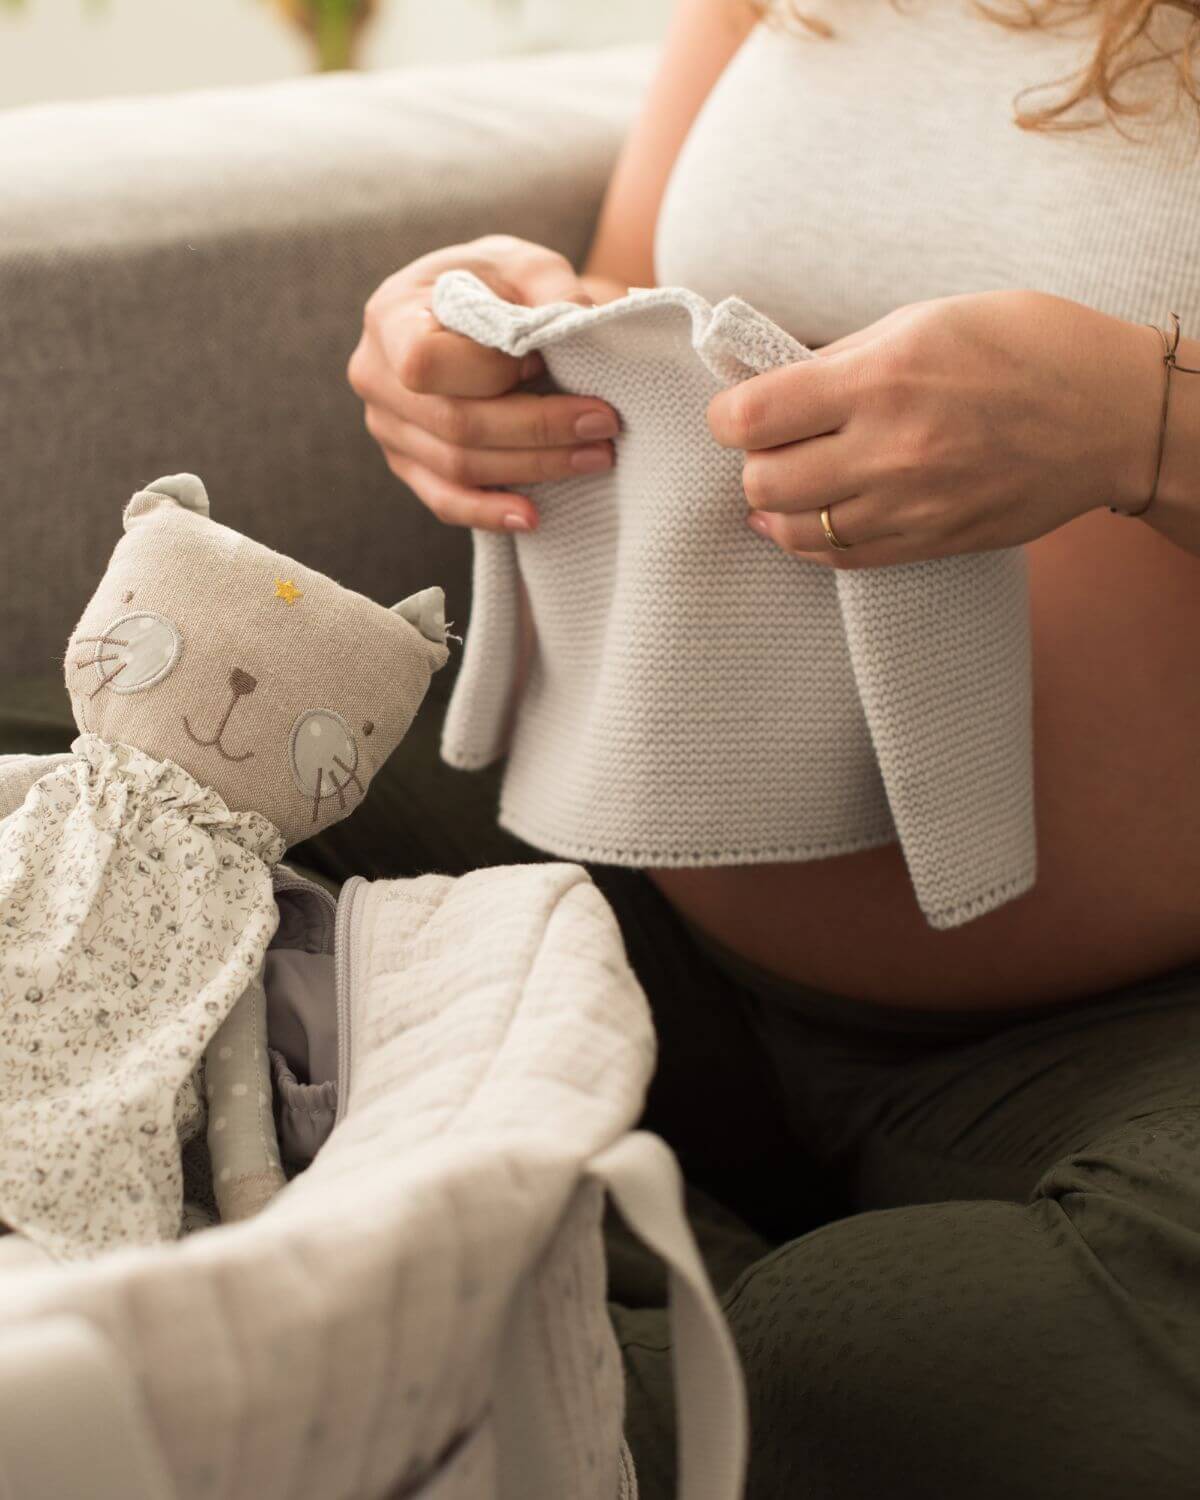 Postpartum Maternity Pads KIT ~ best for hospital birth